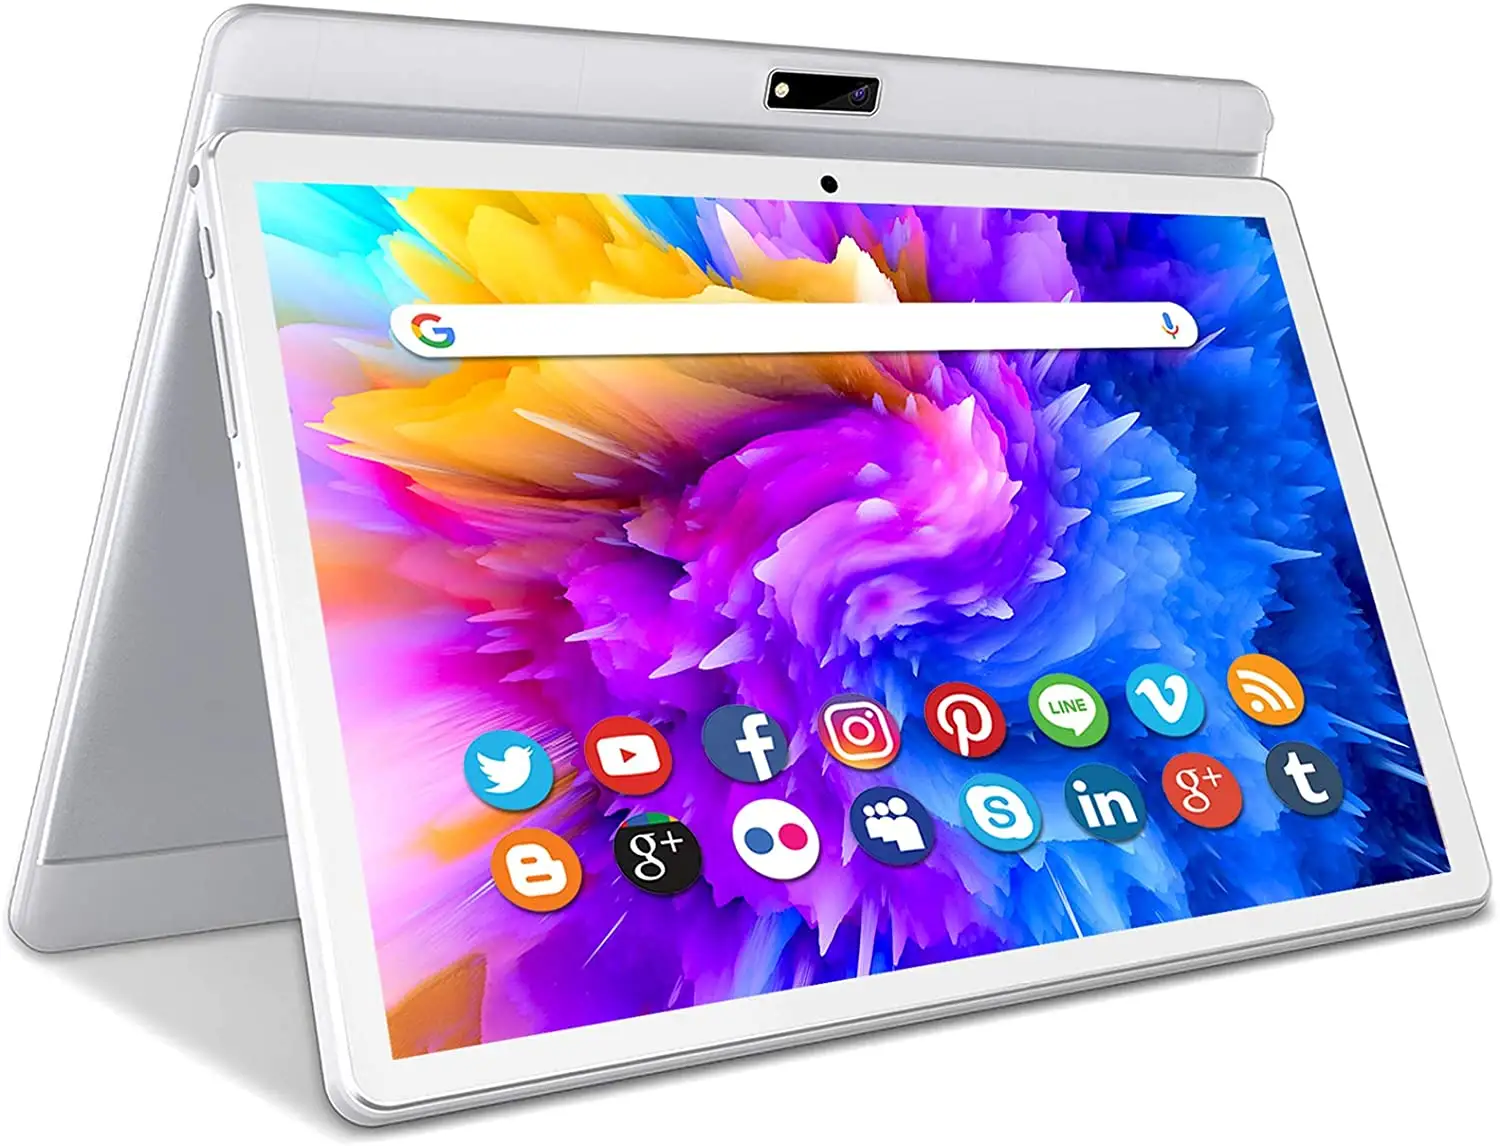 Tablet sc9863, profissional 2022 com tipo-c usb porta android tablet octa core dupla sim gps 4g wifi tablet pc